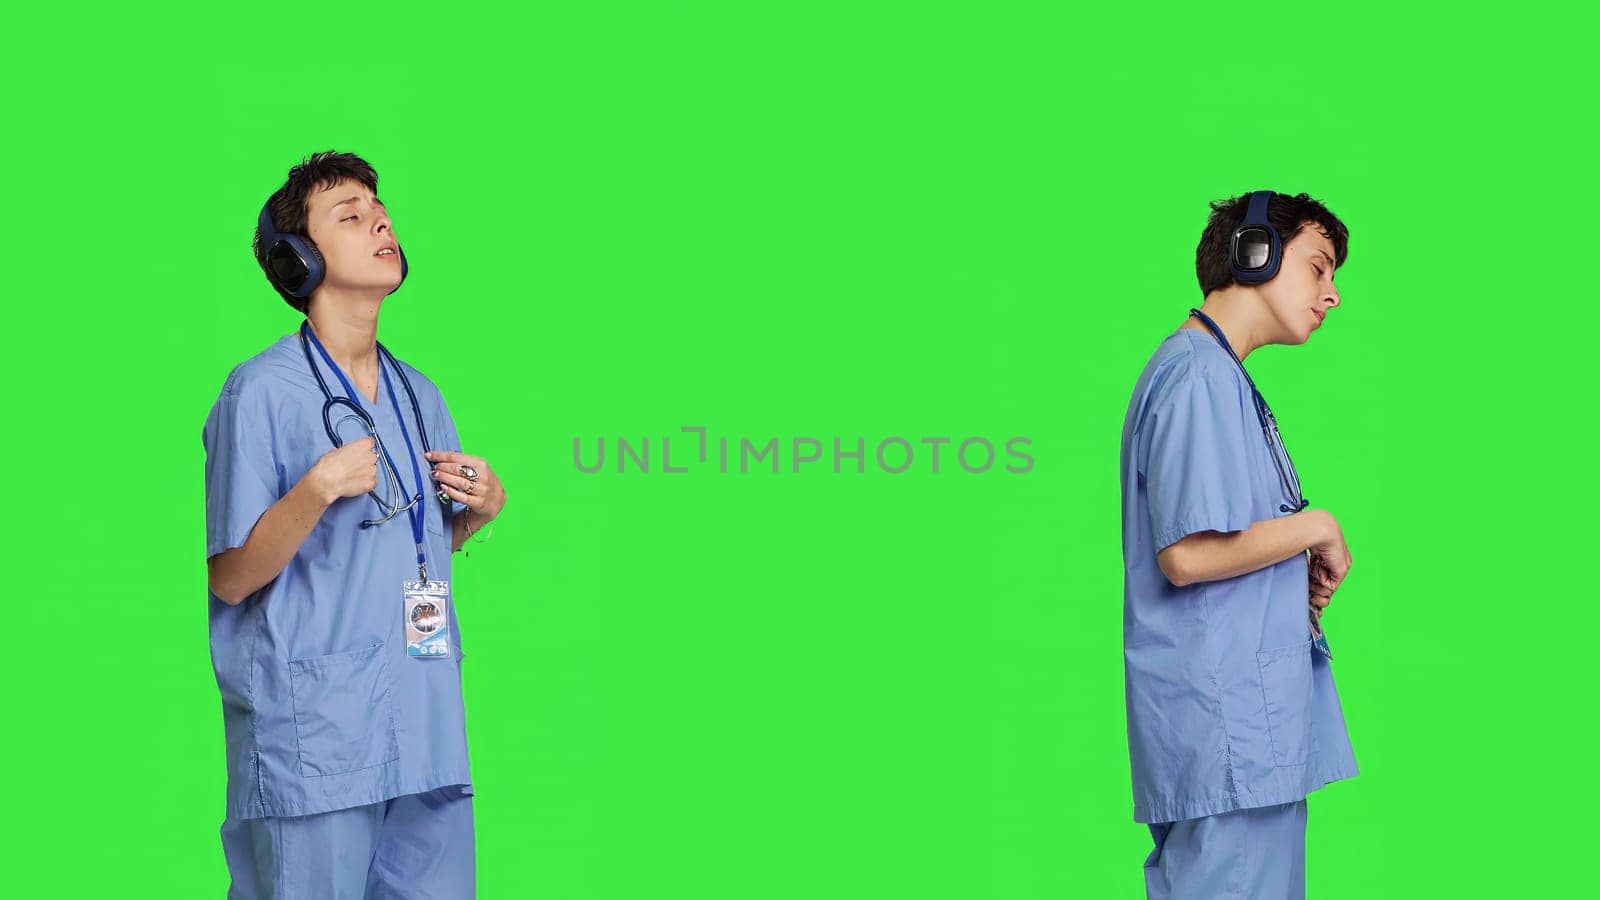 Joyful nurse singing and dancing with wireless headphones on by DCStudio